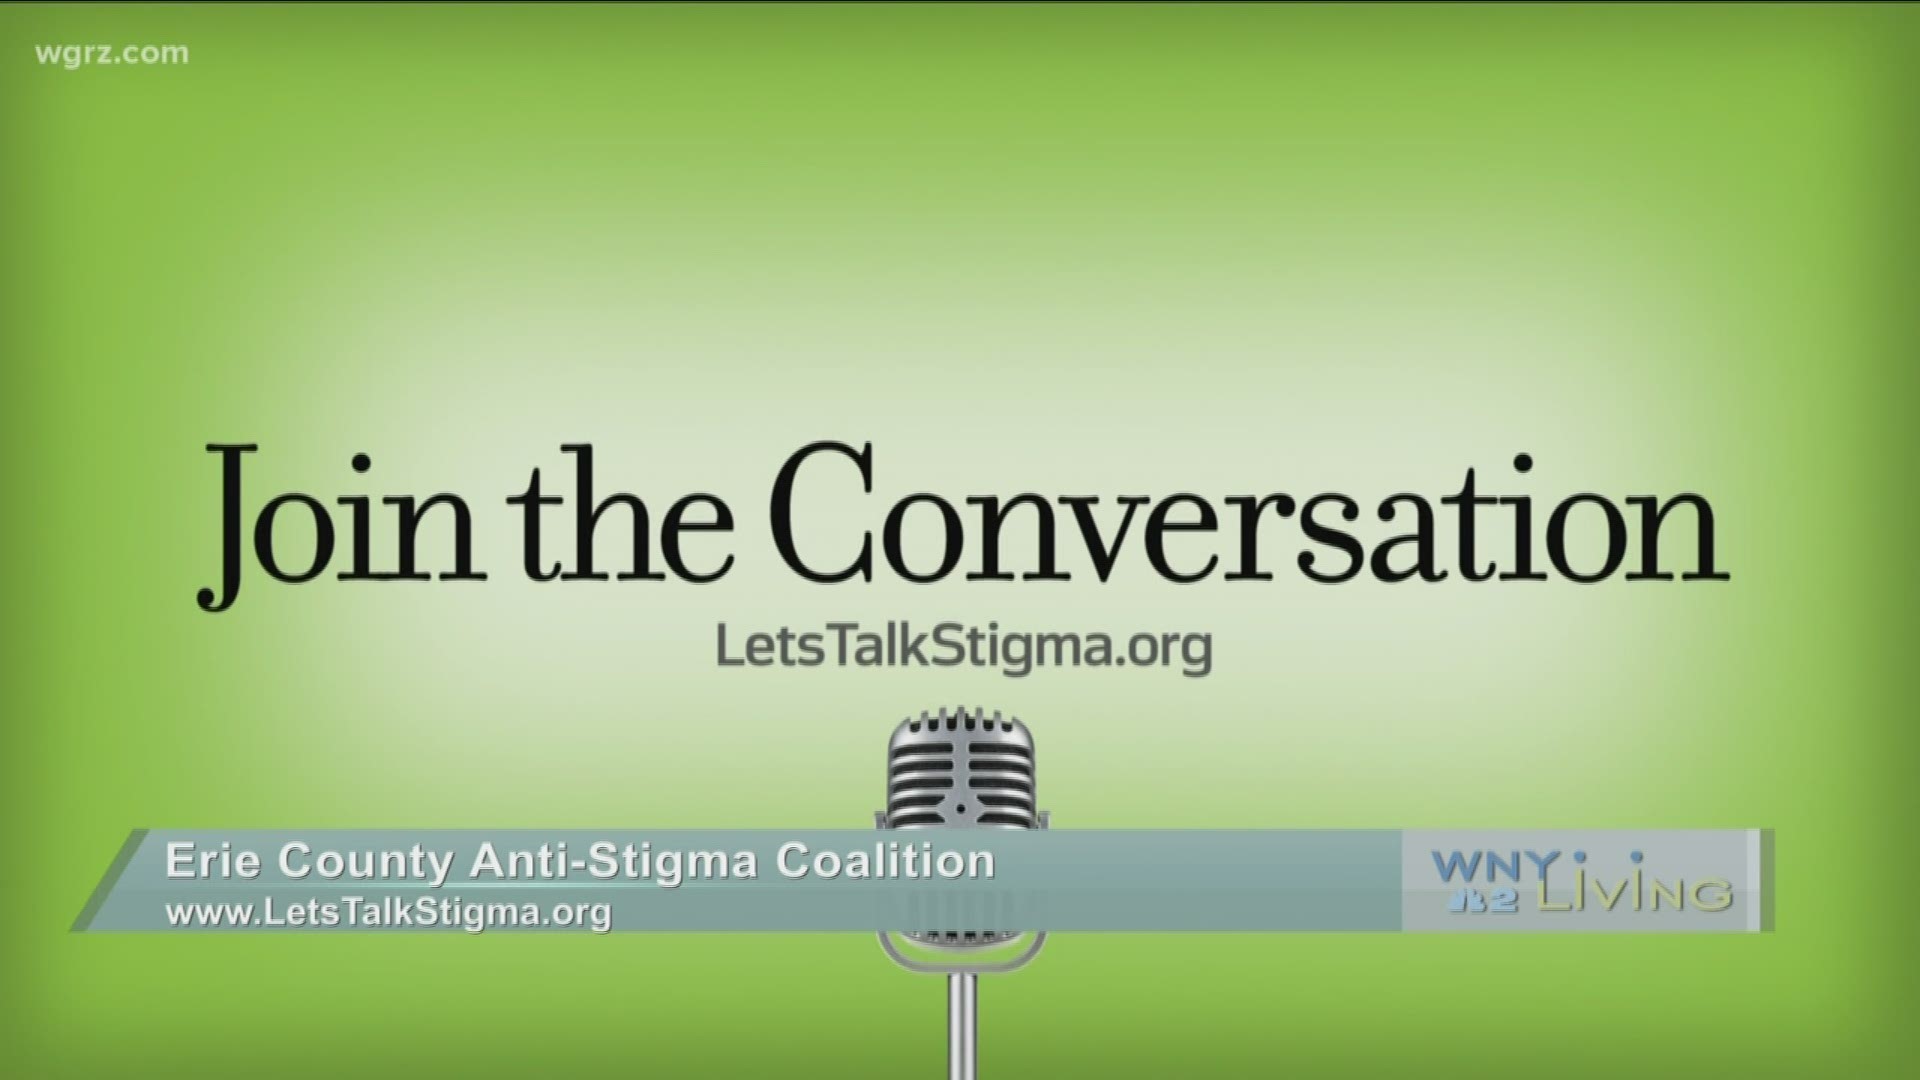 November 23 - Erie County Anti-Stigma Coalition (THIS VIDEO IS SPONSORED BY ERIE COUNTY ANTI-STIGMA COALITION)